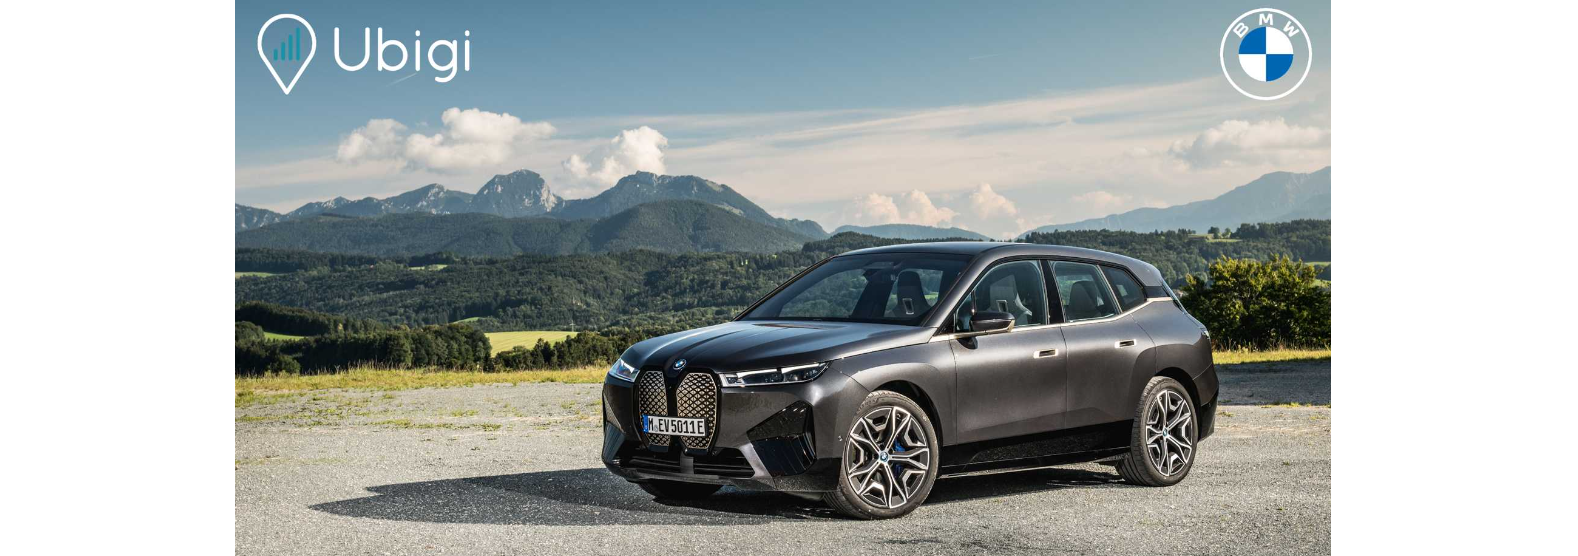 BMW enables Ubigi 5G for vehicle infotainment